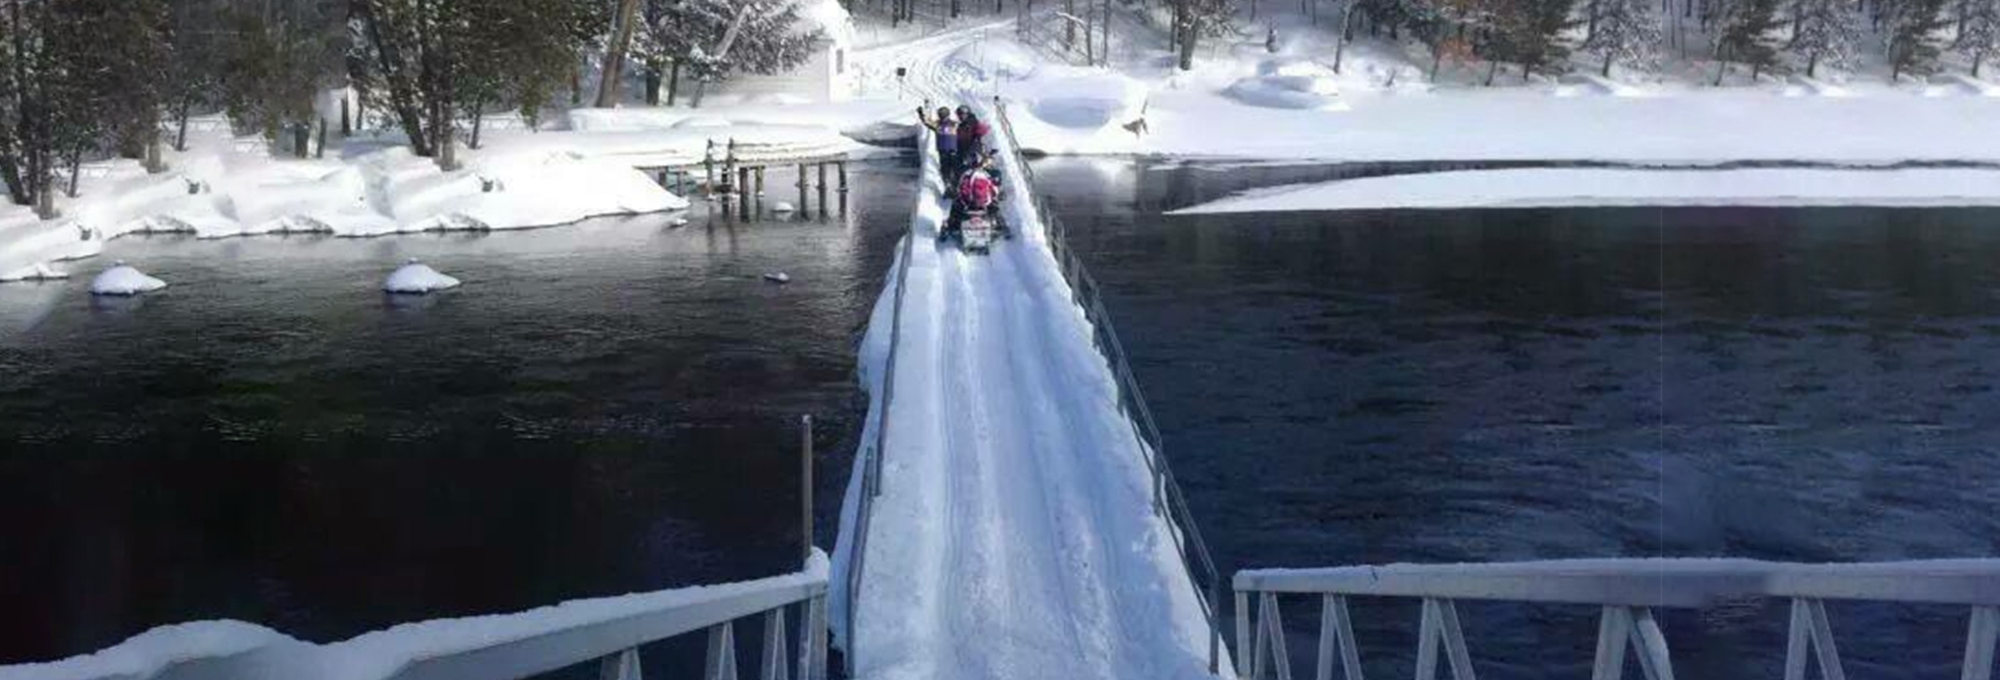 Guided Snowmobile Tours  in Ontario, CA| Ontario Snowcruises, LTD | Snow Bridge